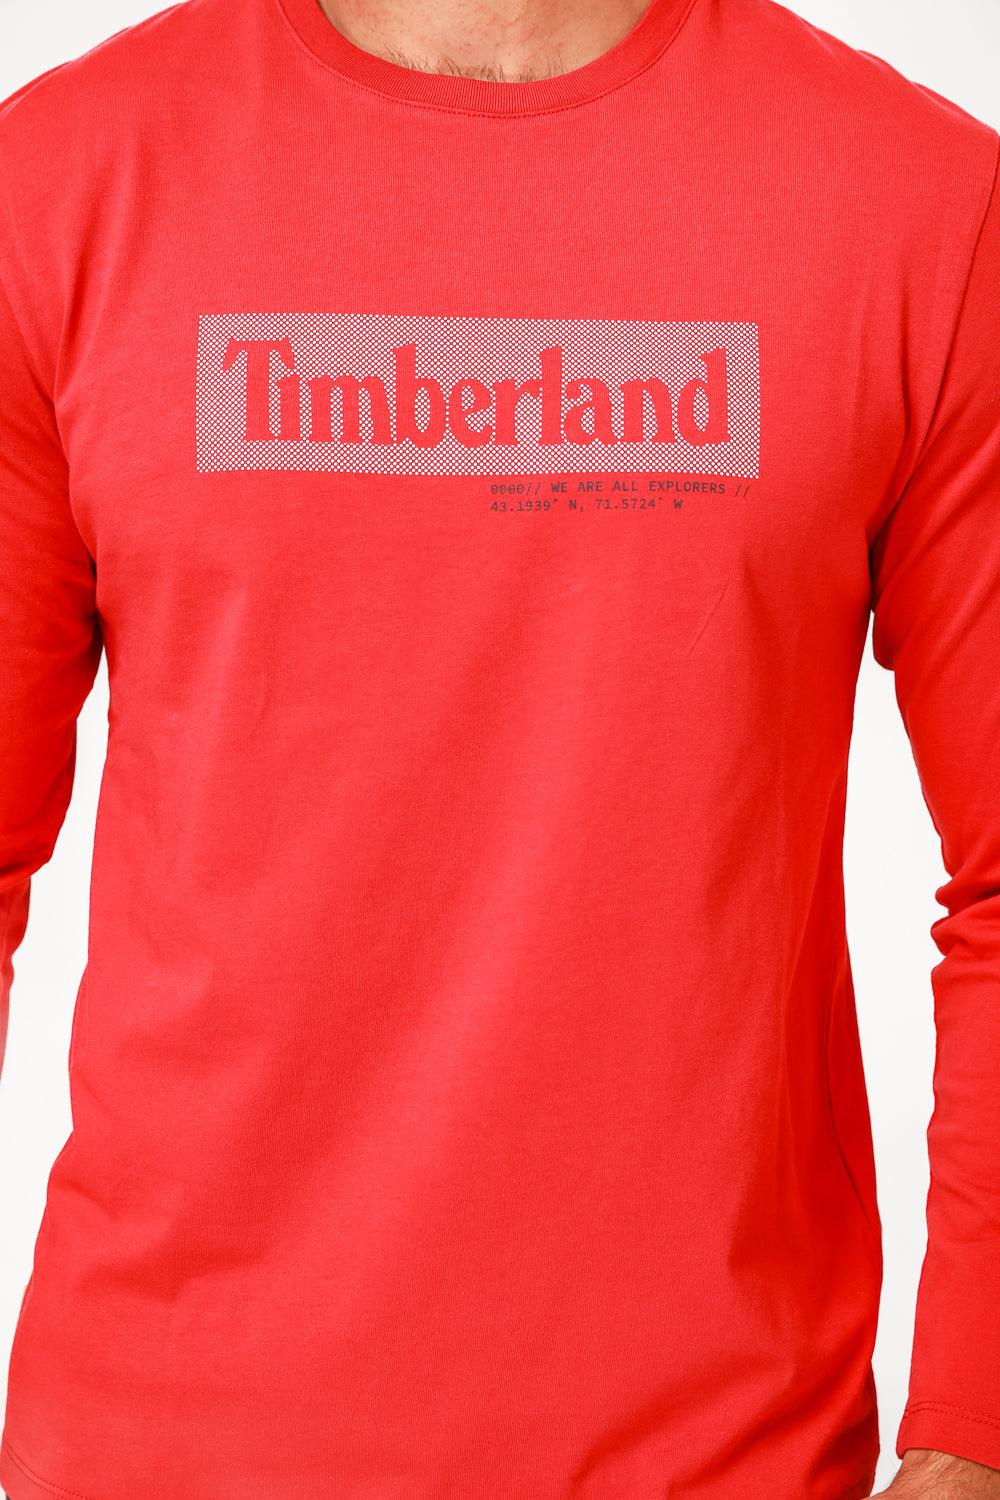 TIMBERLAND - חולצה ארוכה עם לוגו בצבע אדום - MASHBIR//365